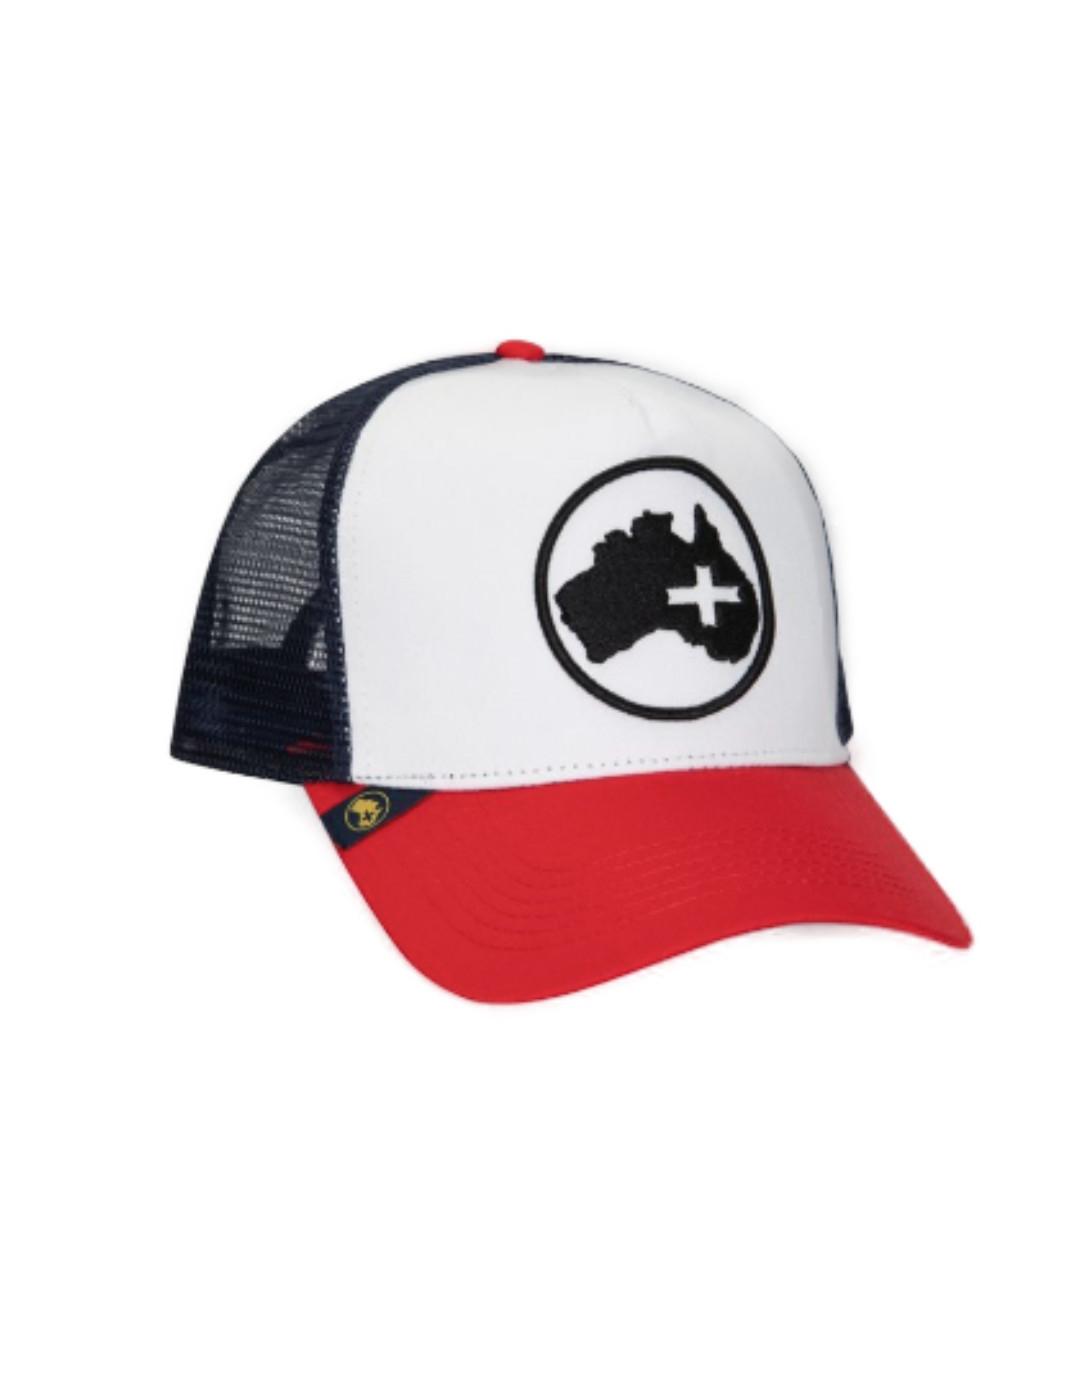 Gorra Altonadock blanca roja y marino con logo marino unisex